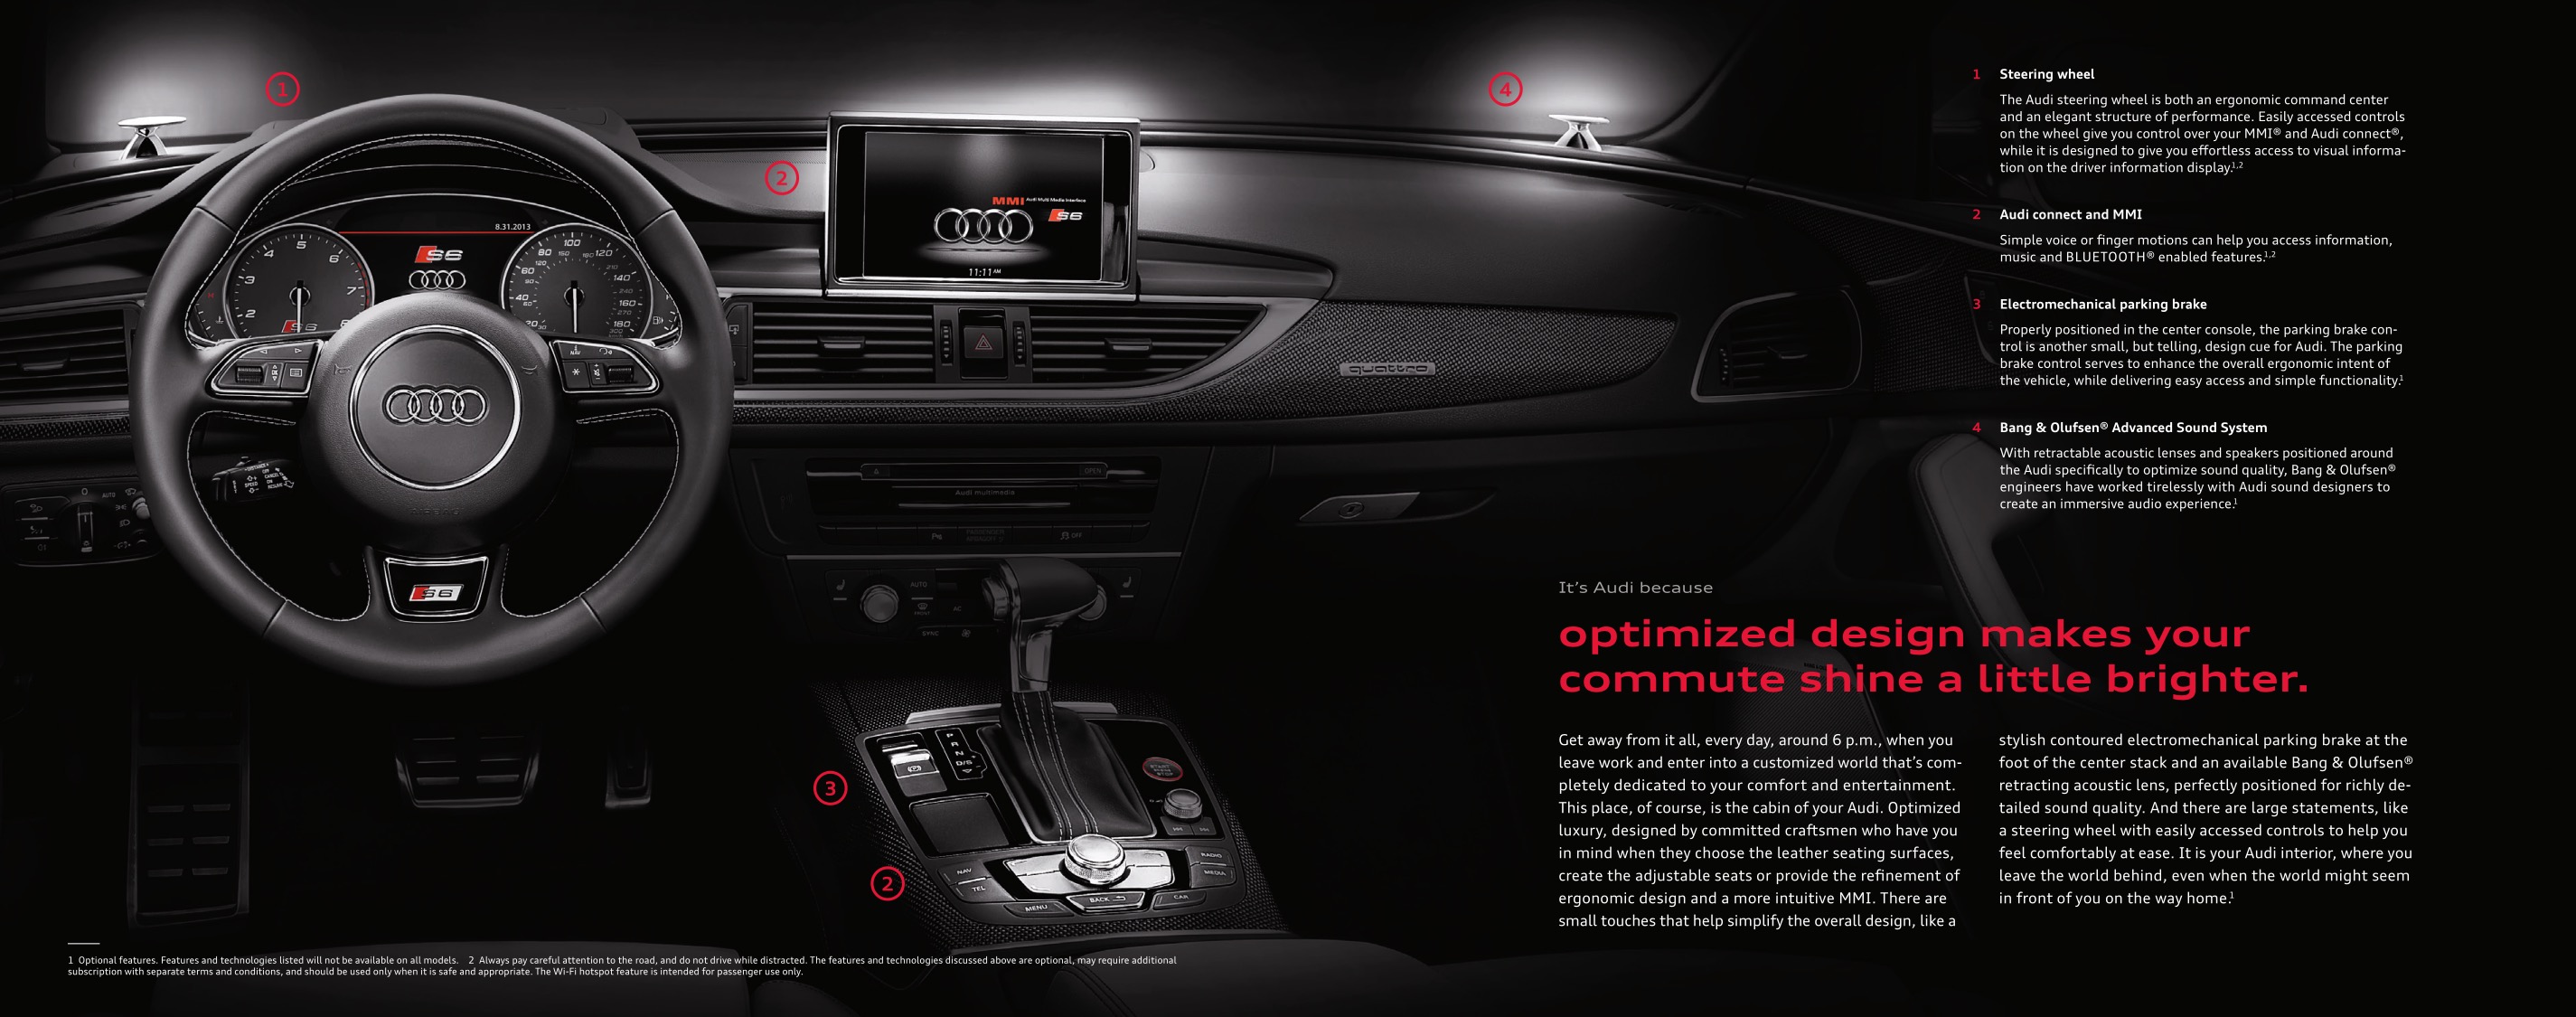 2014 Audi A7 Brochure Page 20